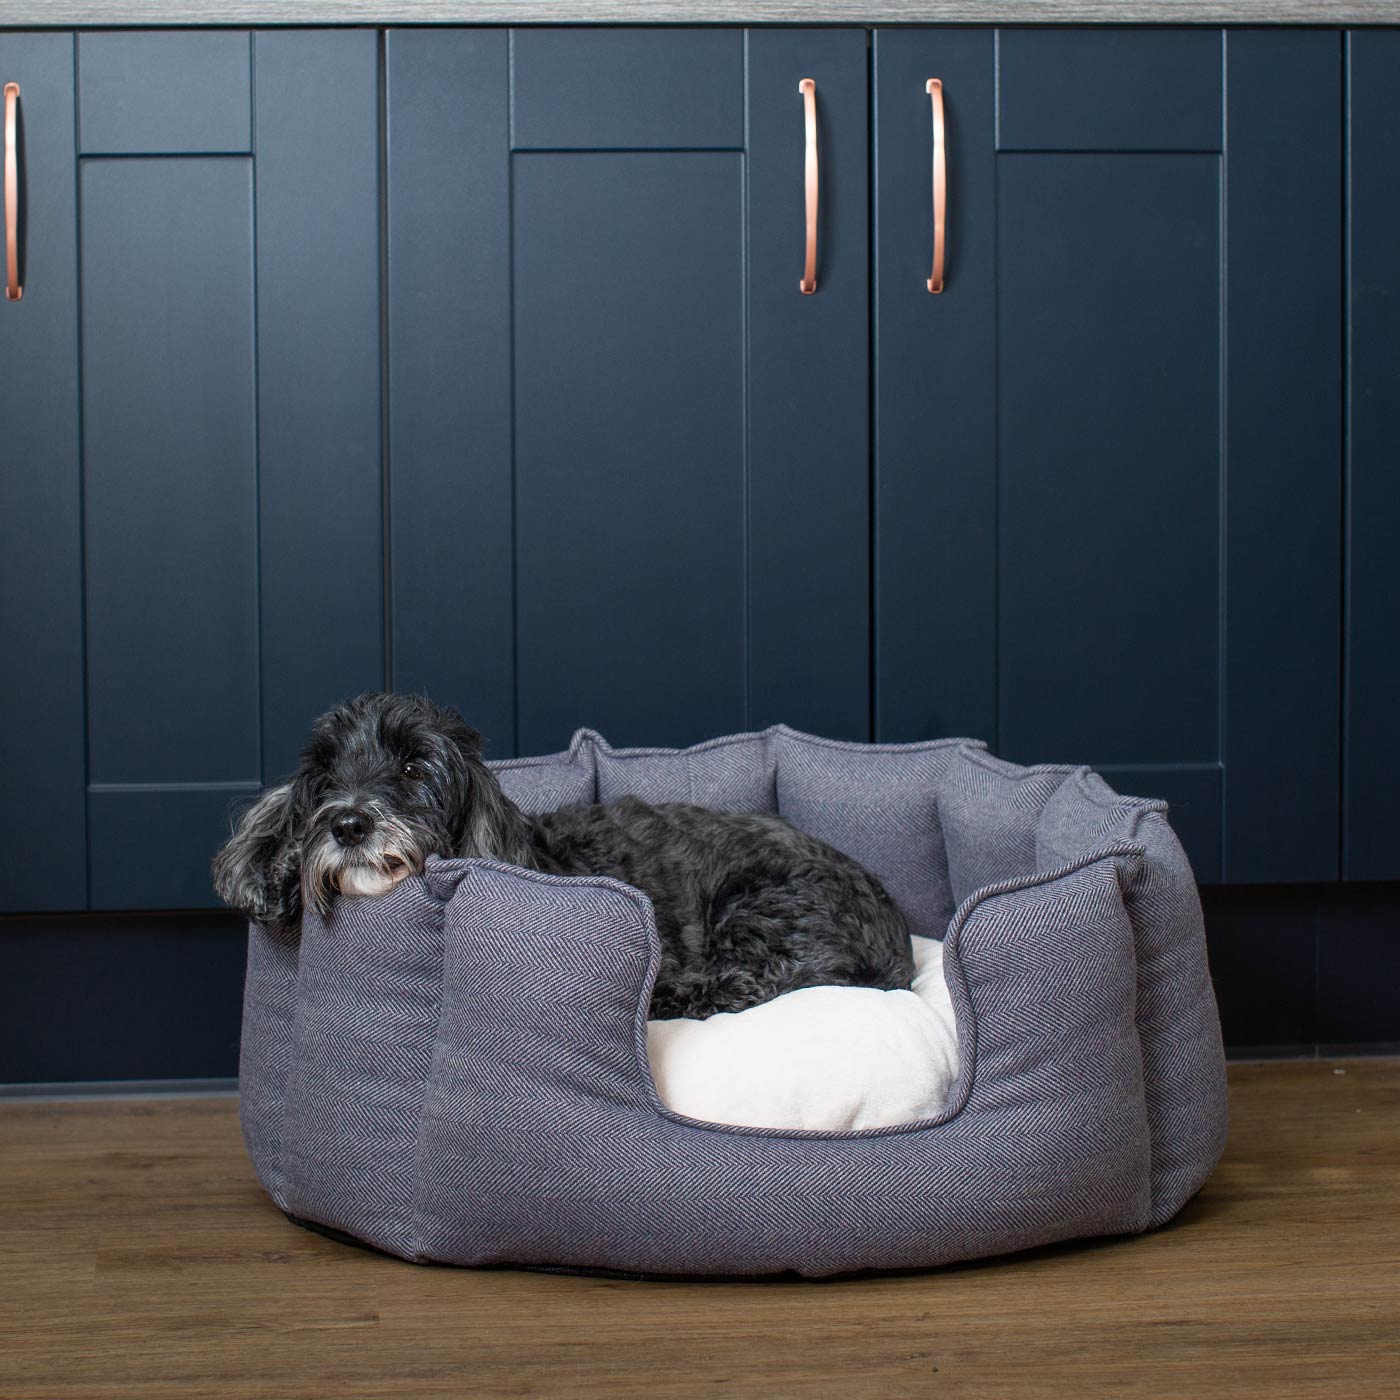 High Wall Herringbone Tweed Bed For Dogs